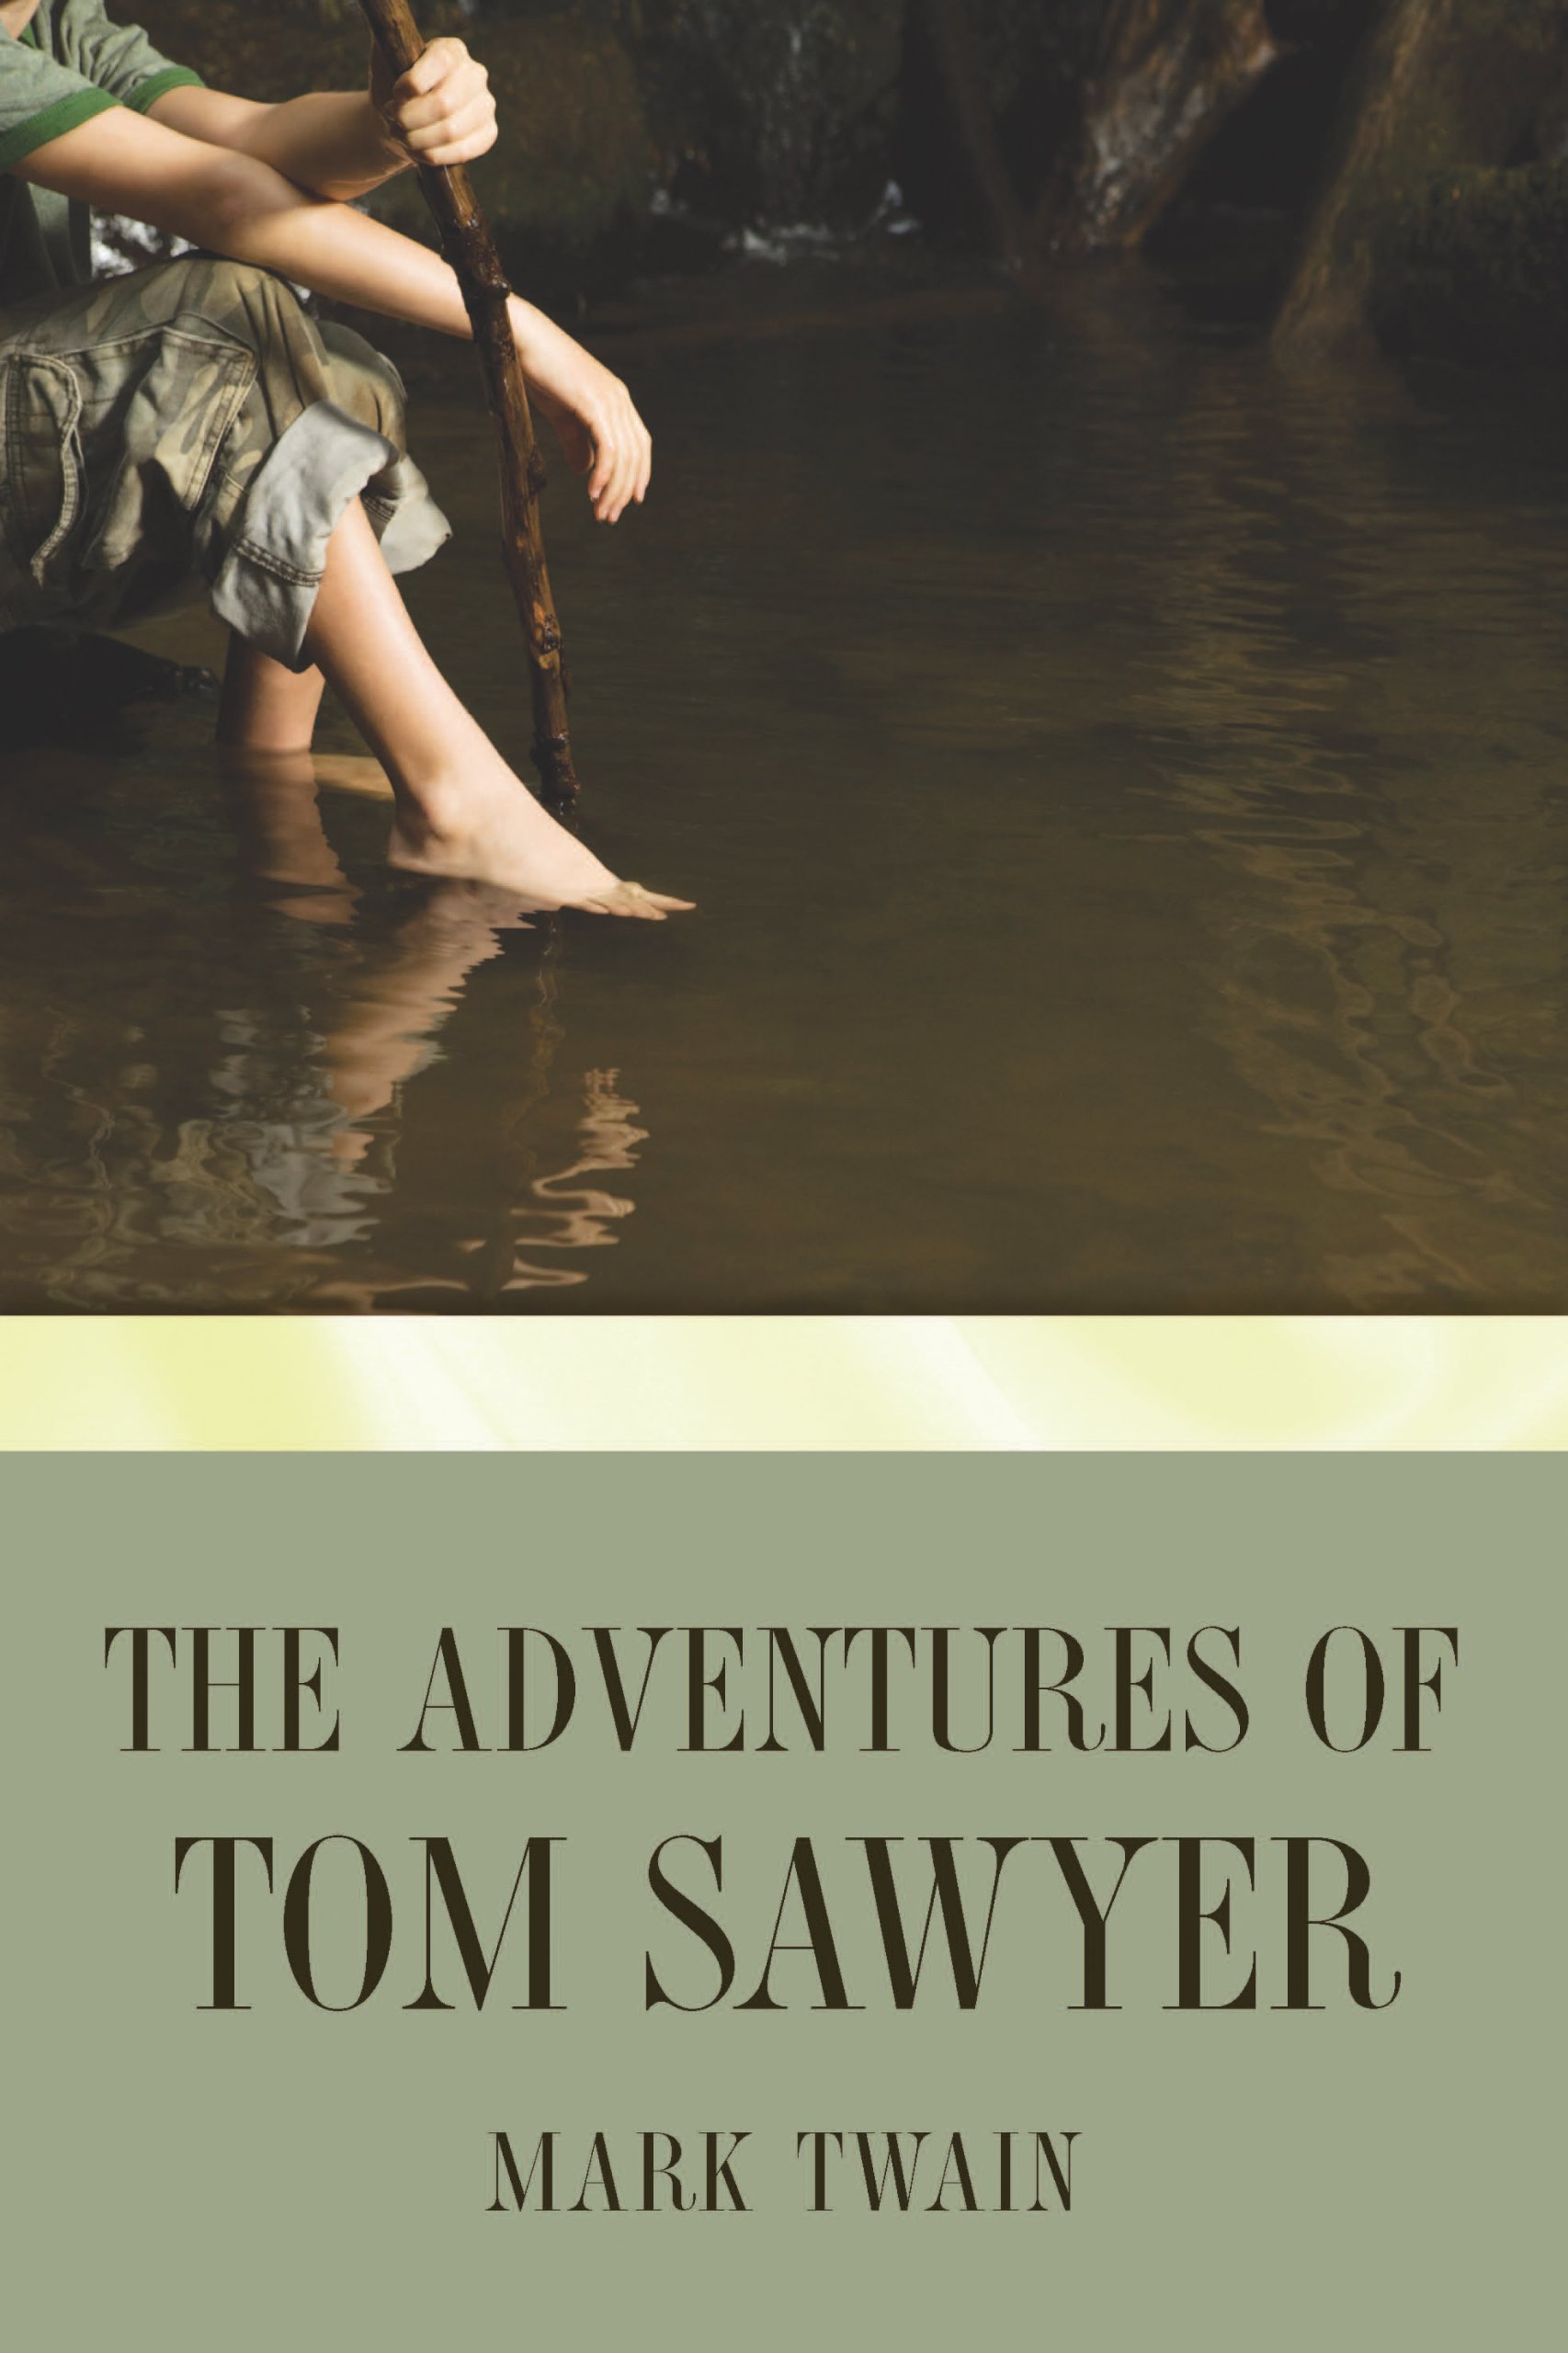 The Adventures of Tom Sawyer (Tom Sawyer & Huckleberry Finn Series Book 1)